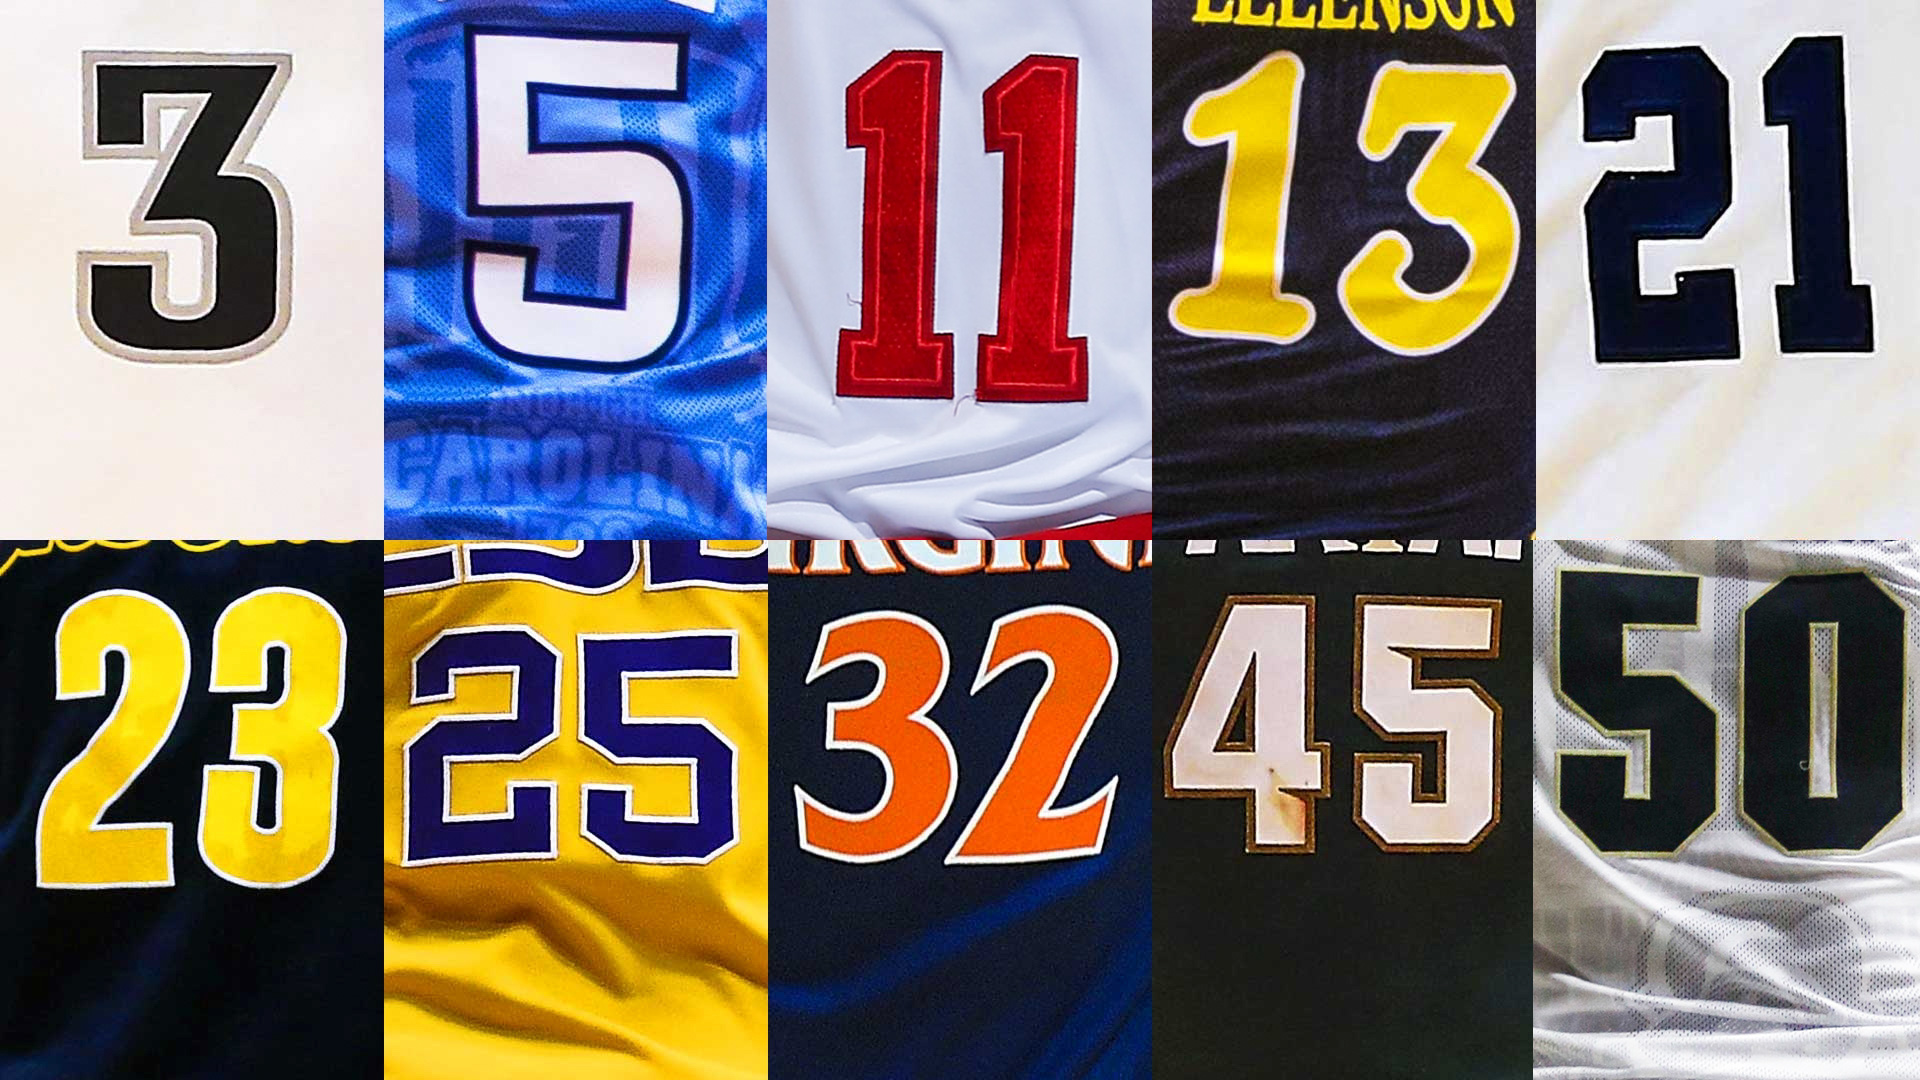 Basketball Uniform Numbers 31